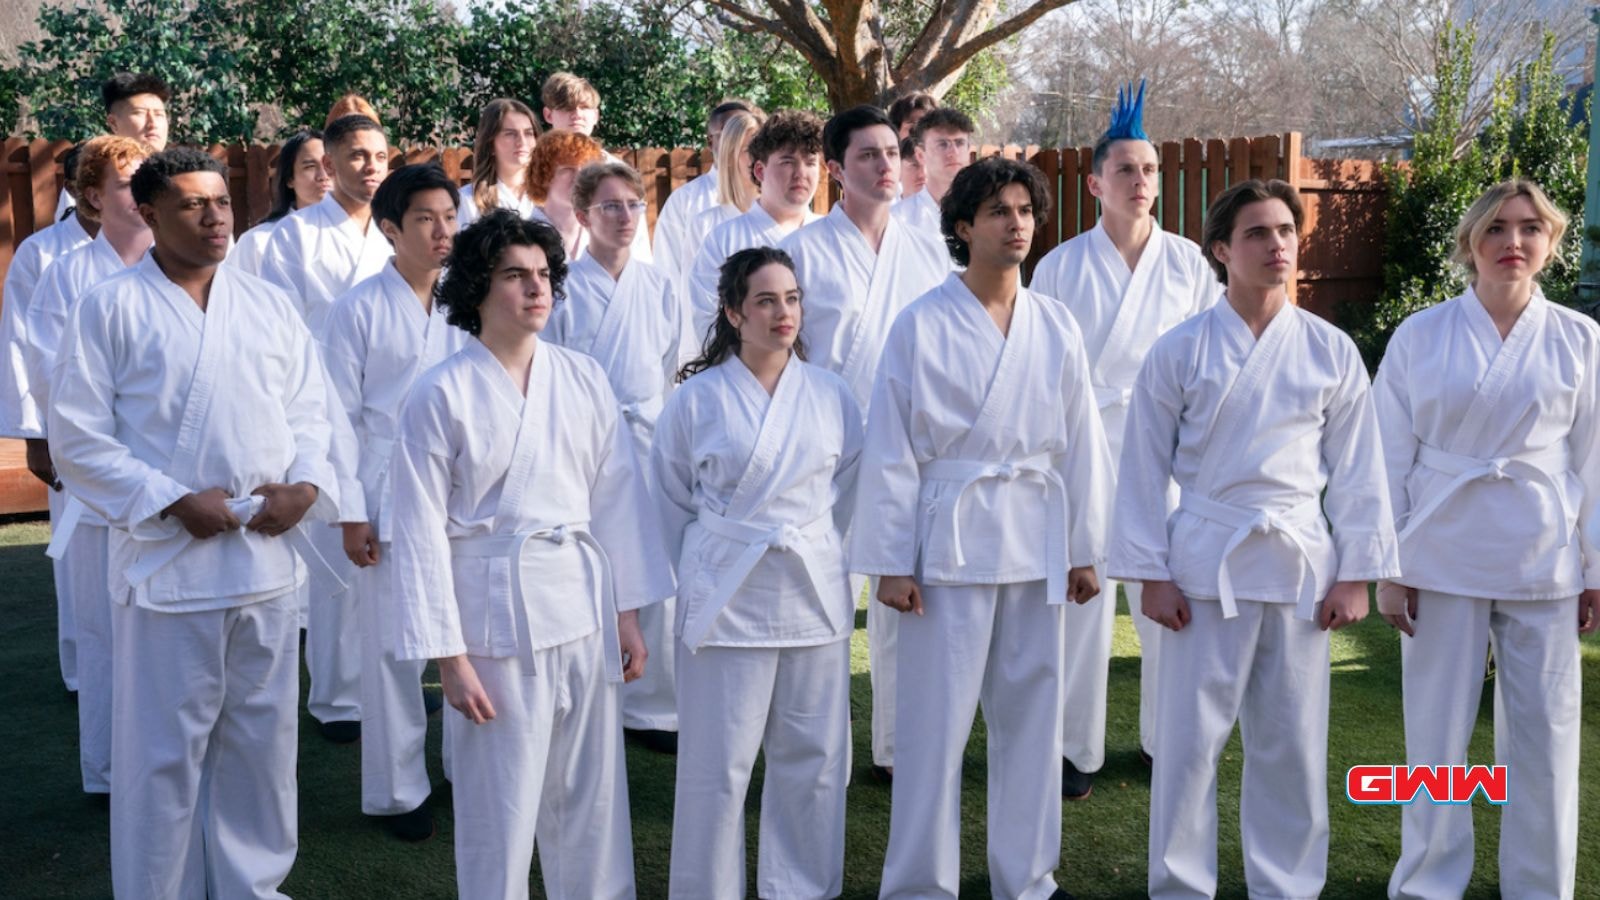 Karate students gathered together in white uniforms,  Cobra Kai Season 6 Trailer 